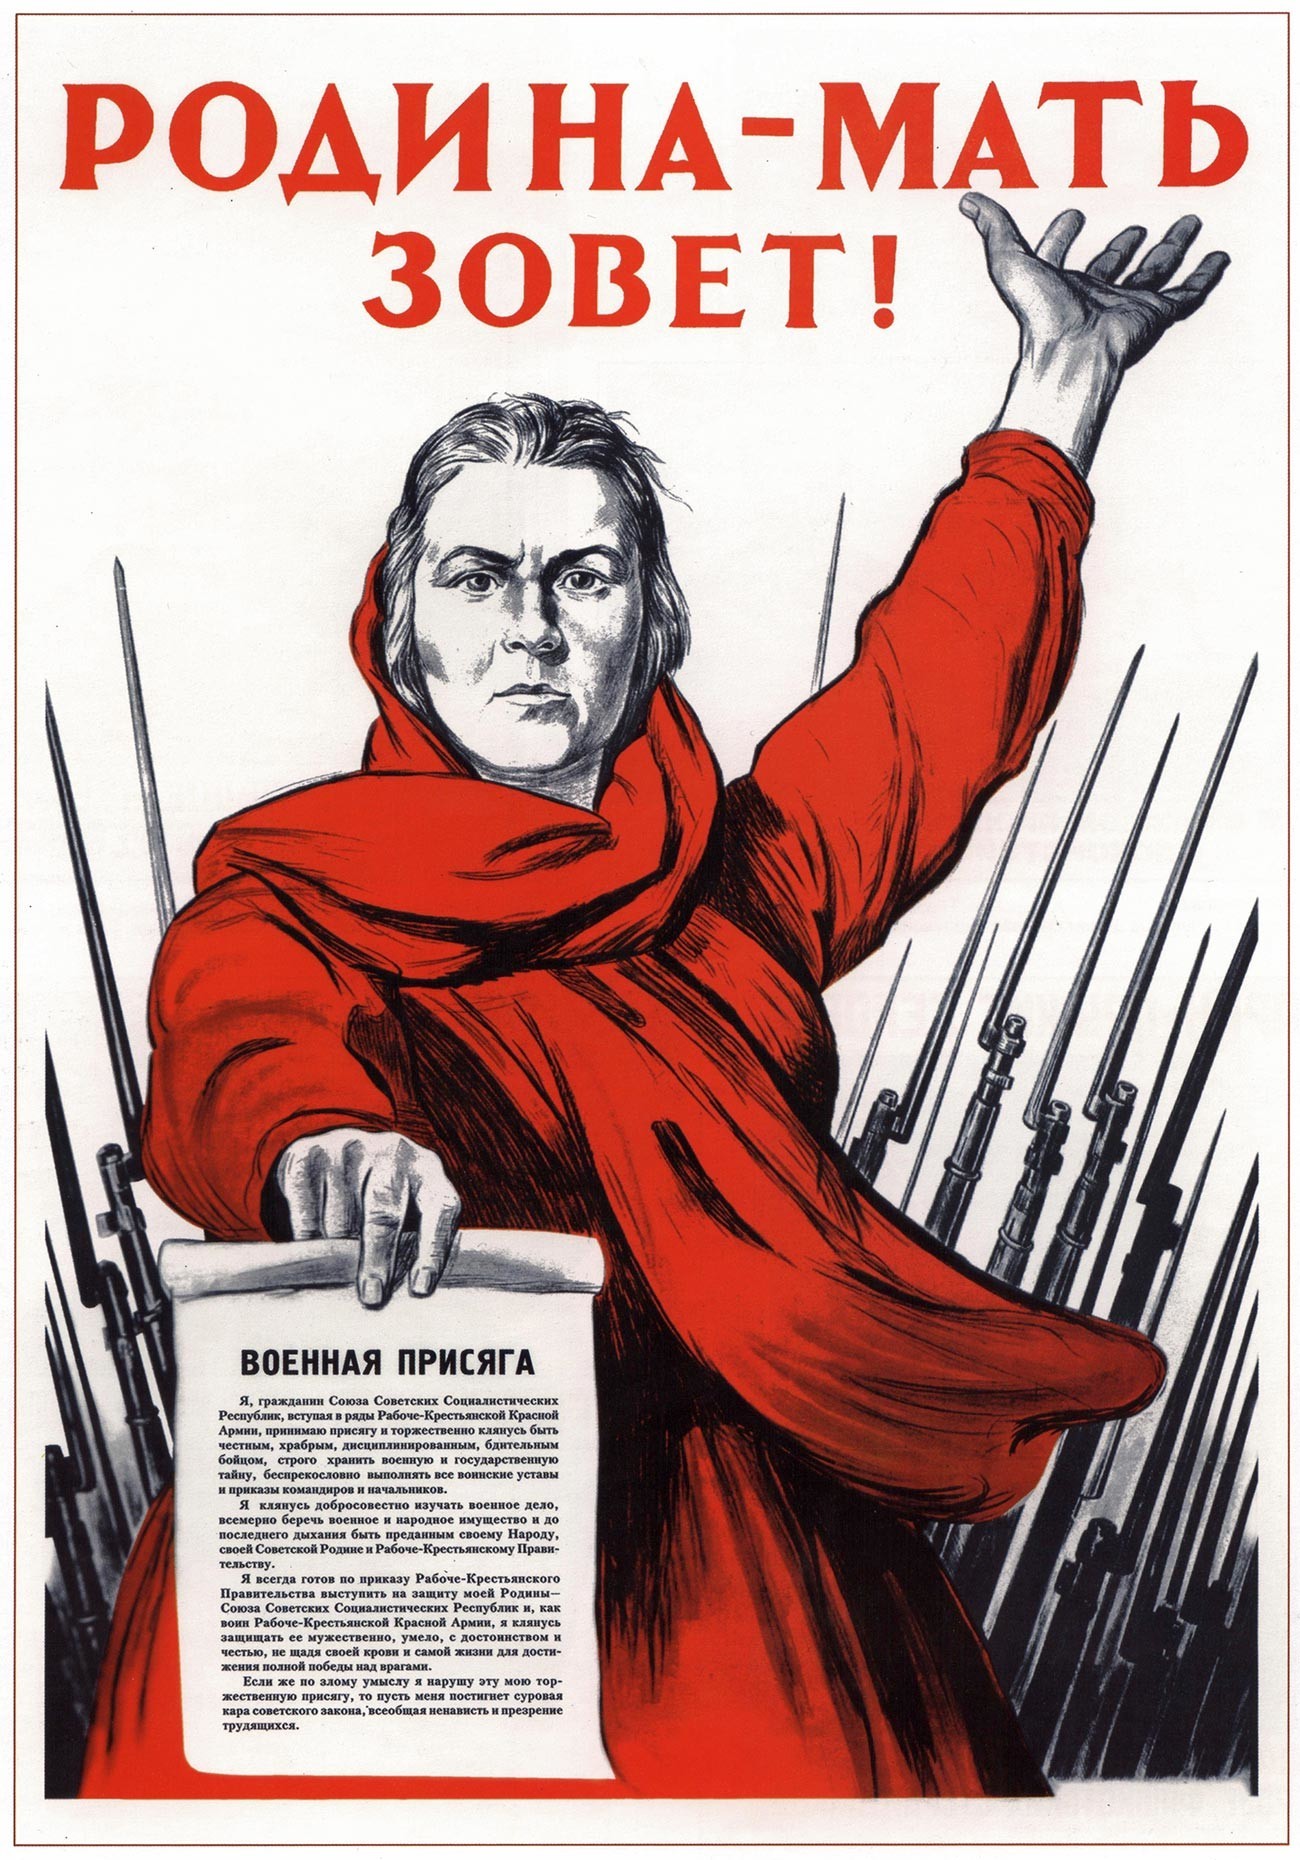 Cartel soviético ‘La patria llama’, 1941